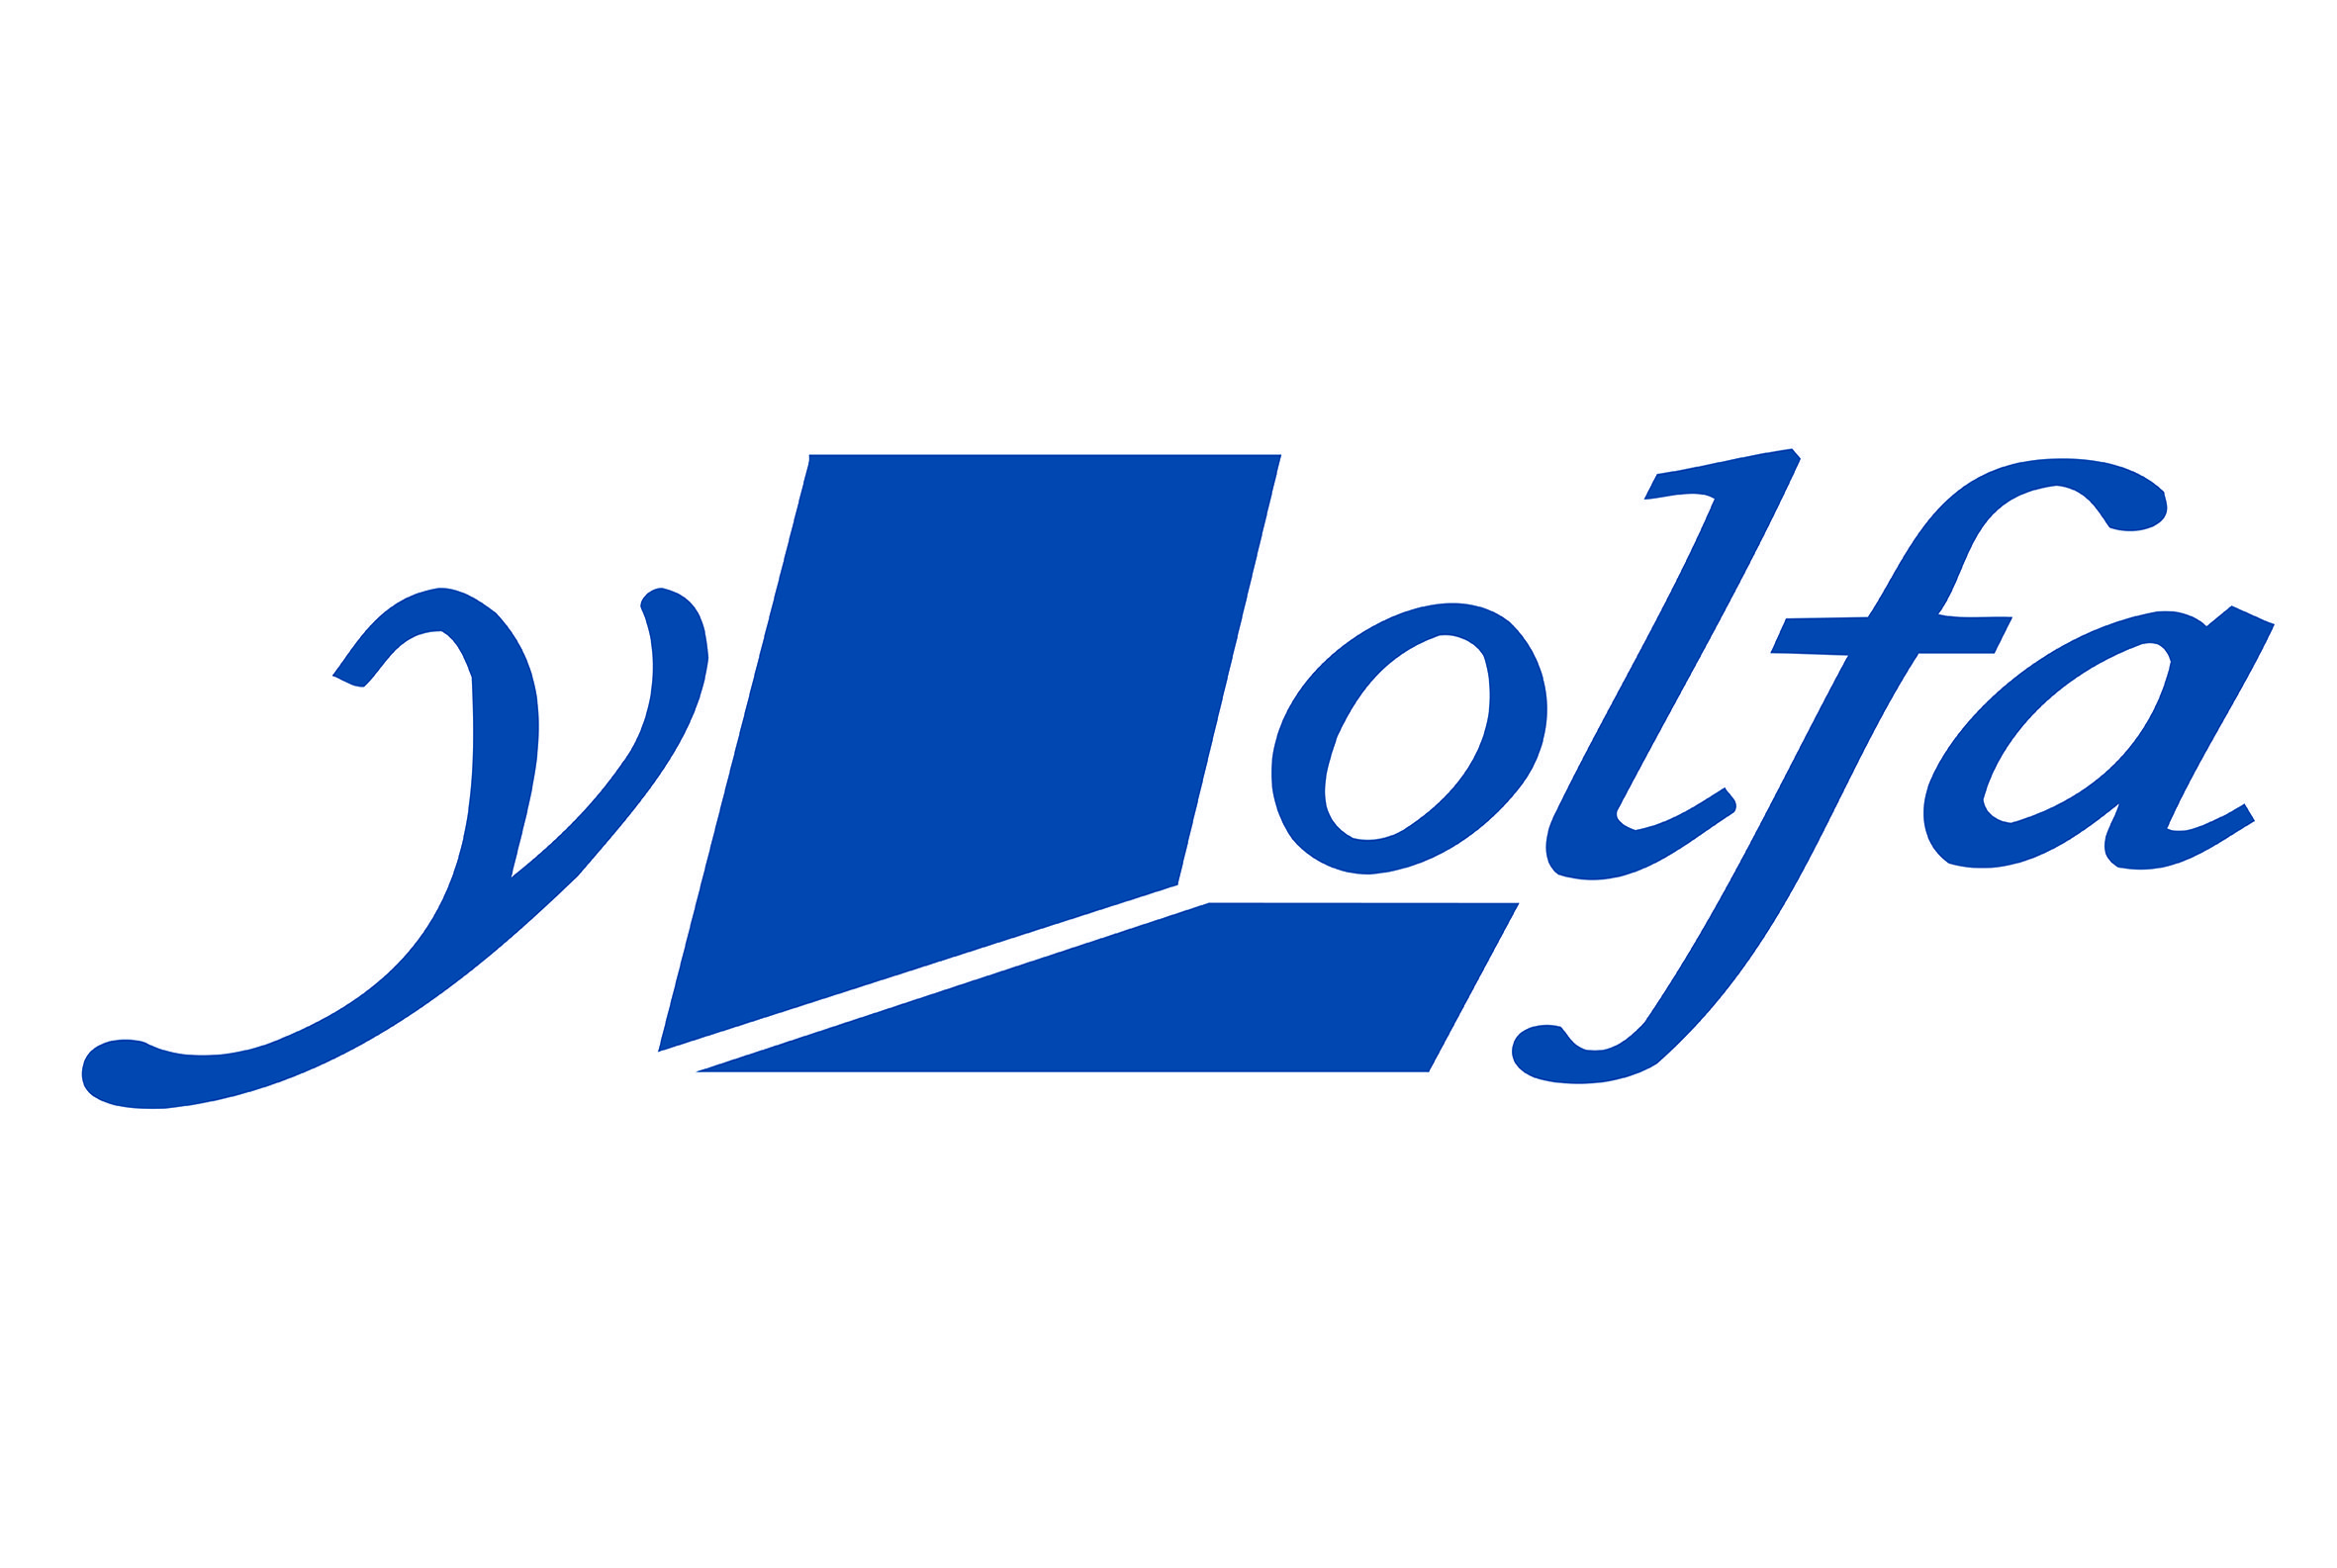 Y Lolfa logo